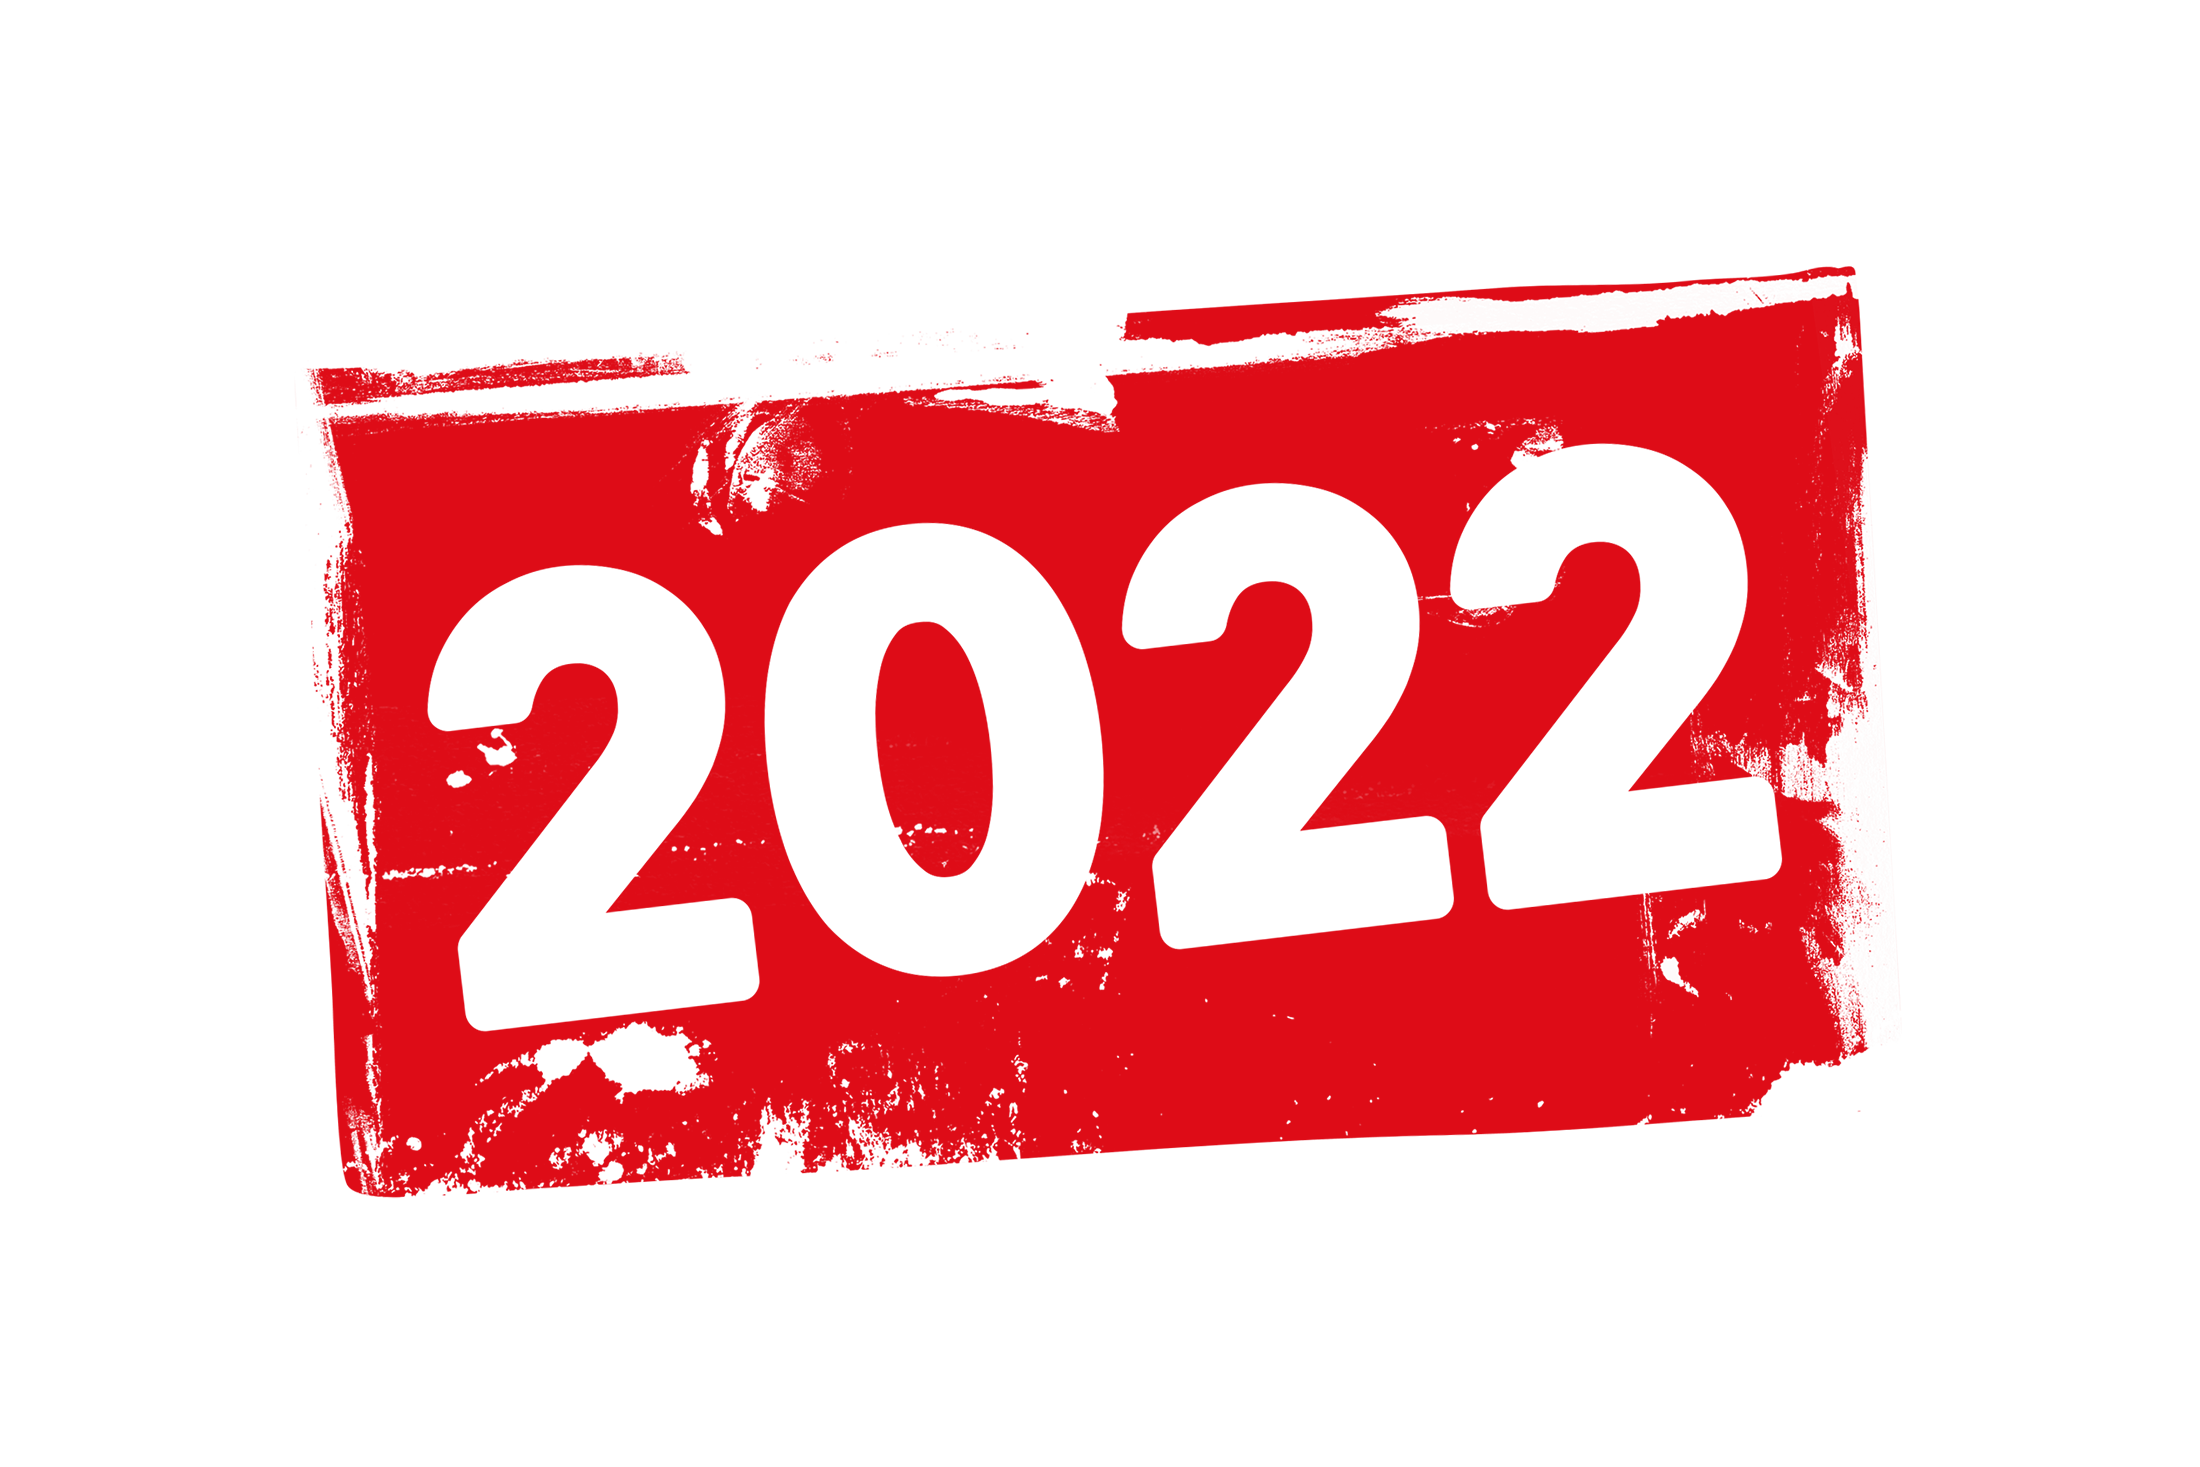 2022 rok